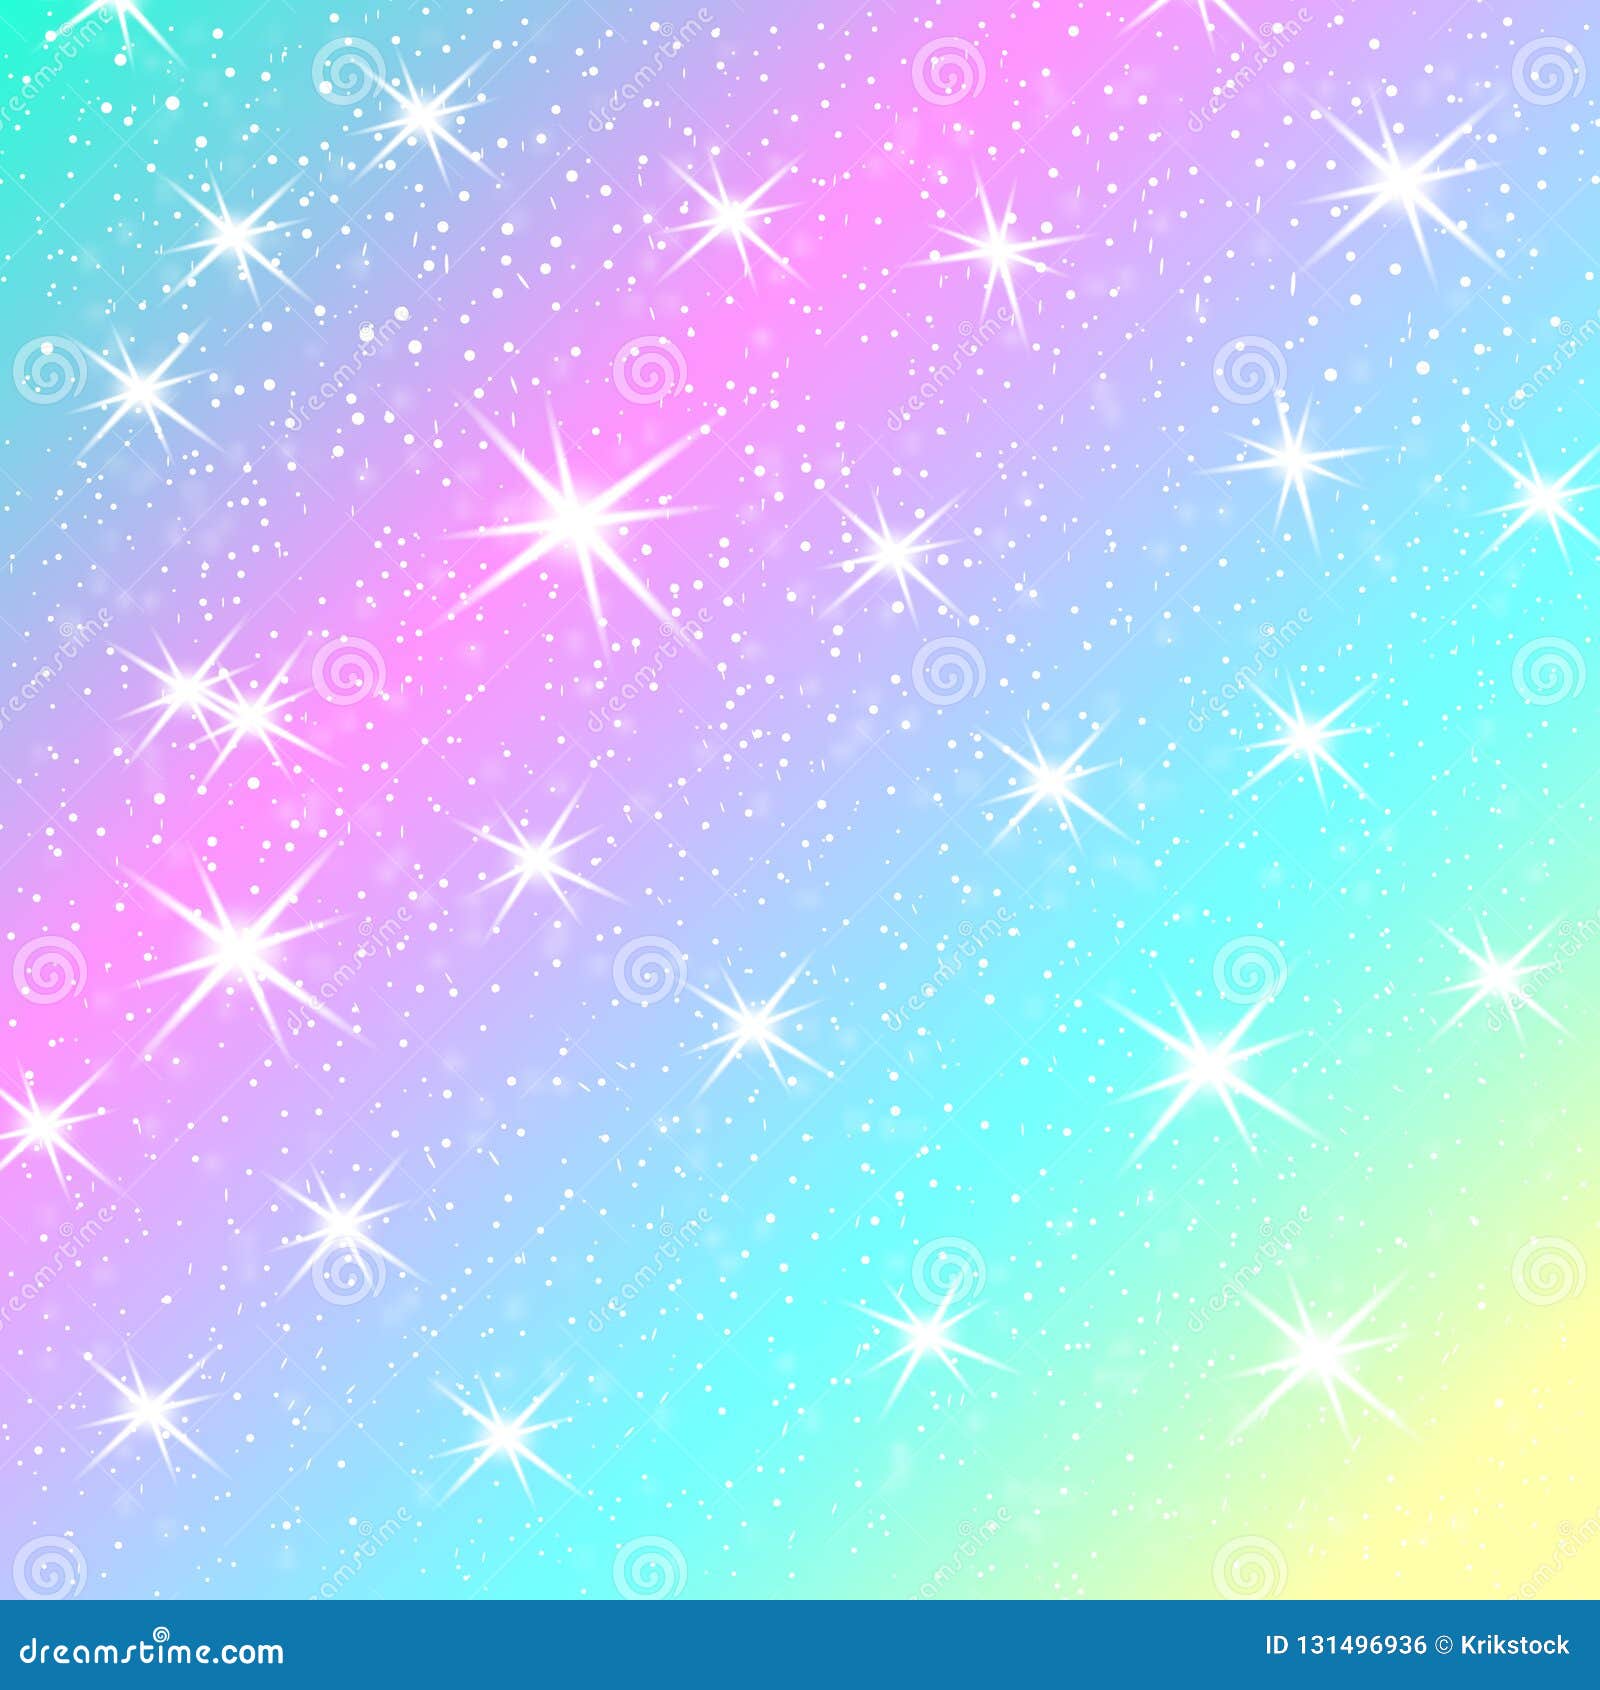 Unicorn On Rainbow Moon Shooting Star Fantasy Magic Dream Cute Cartoon ...